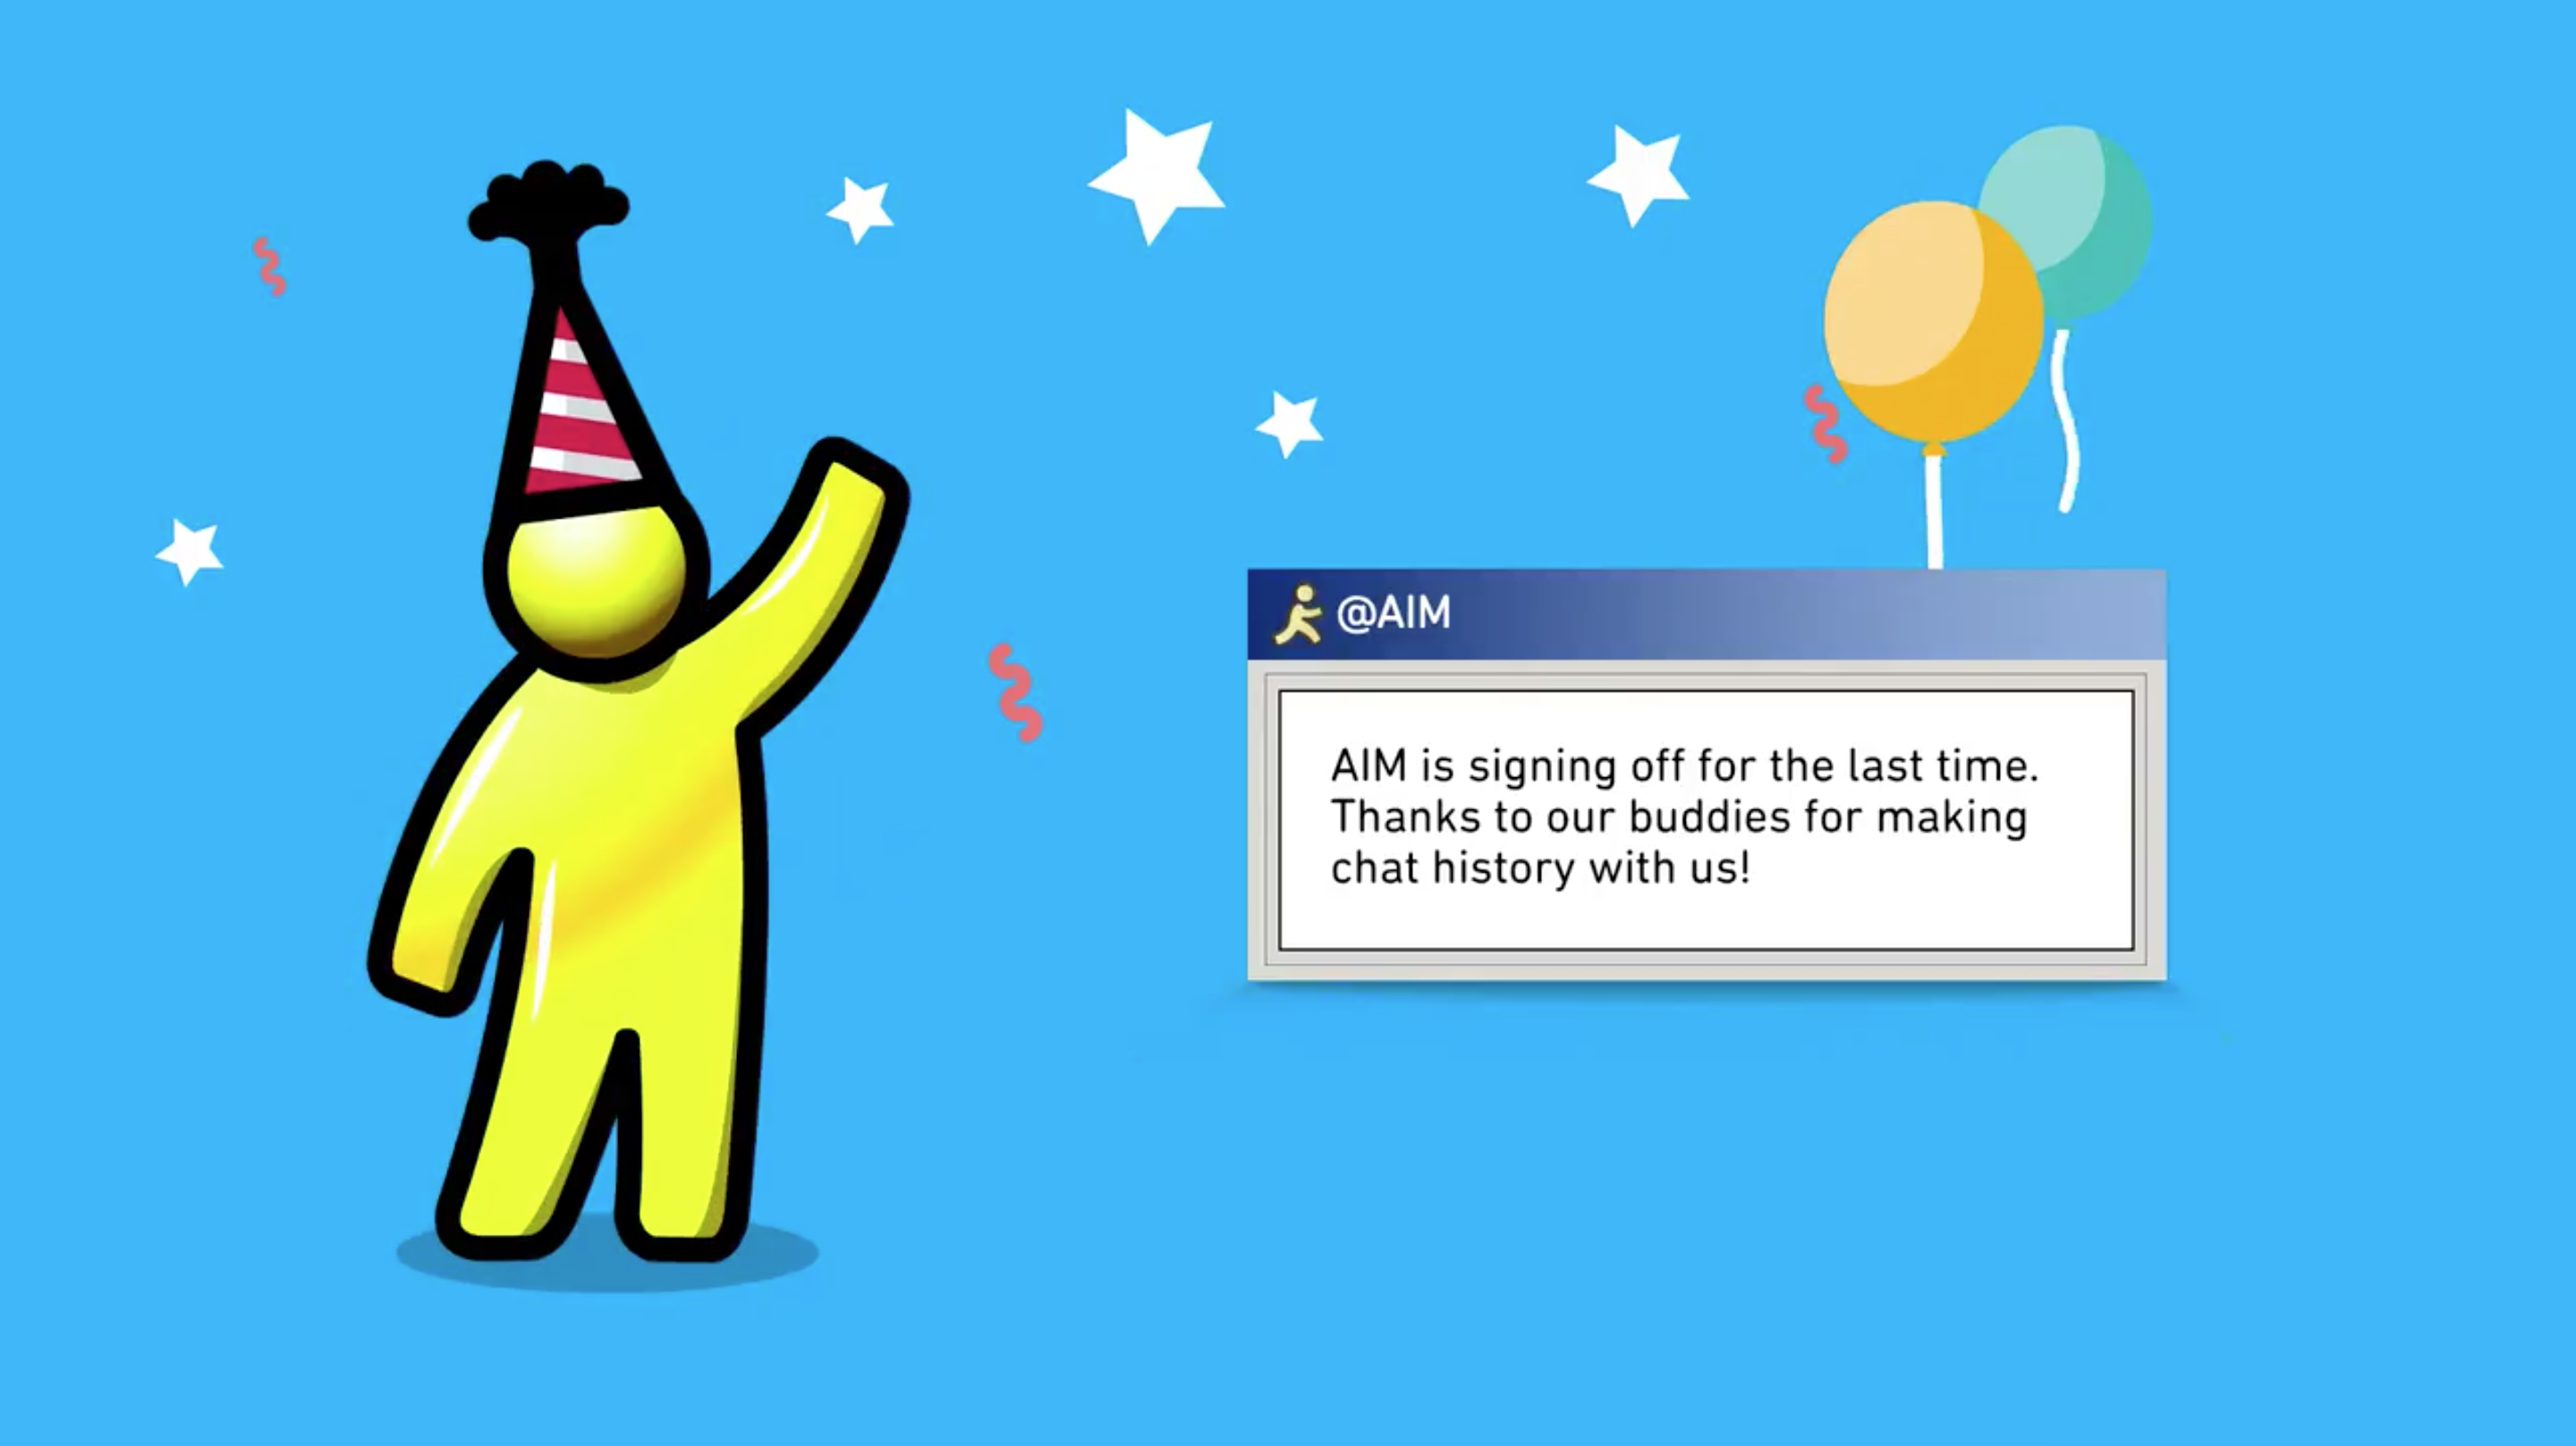 AOL Instant Messenger ‘Running Man’ waving goodbye